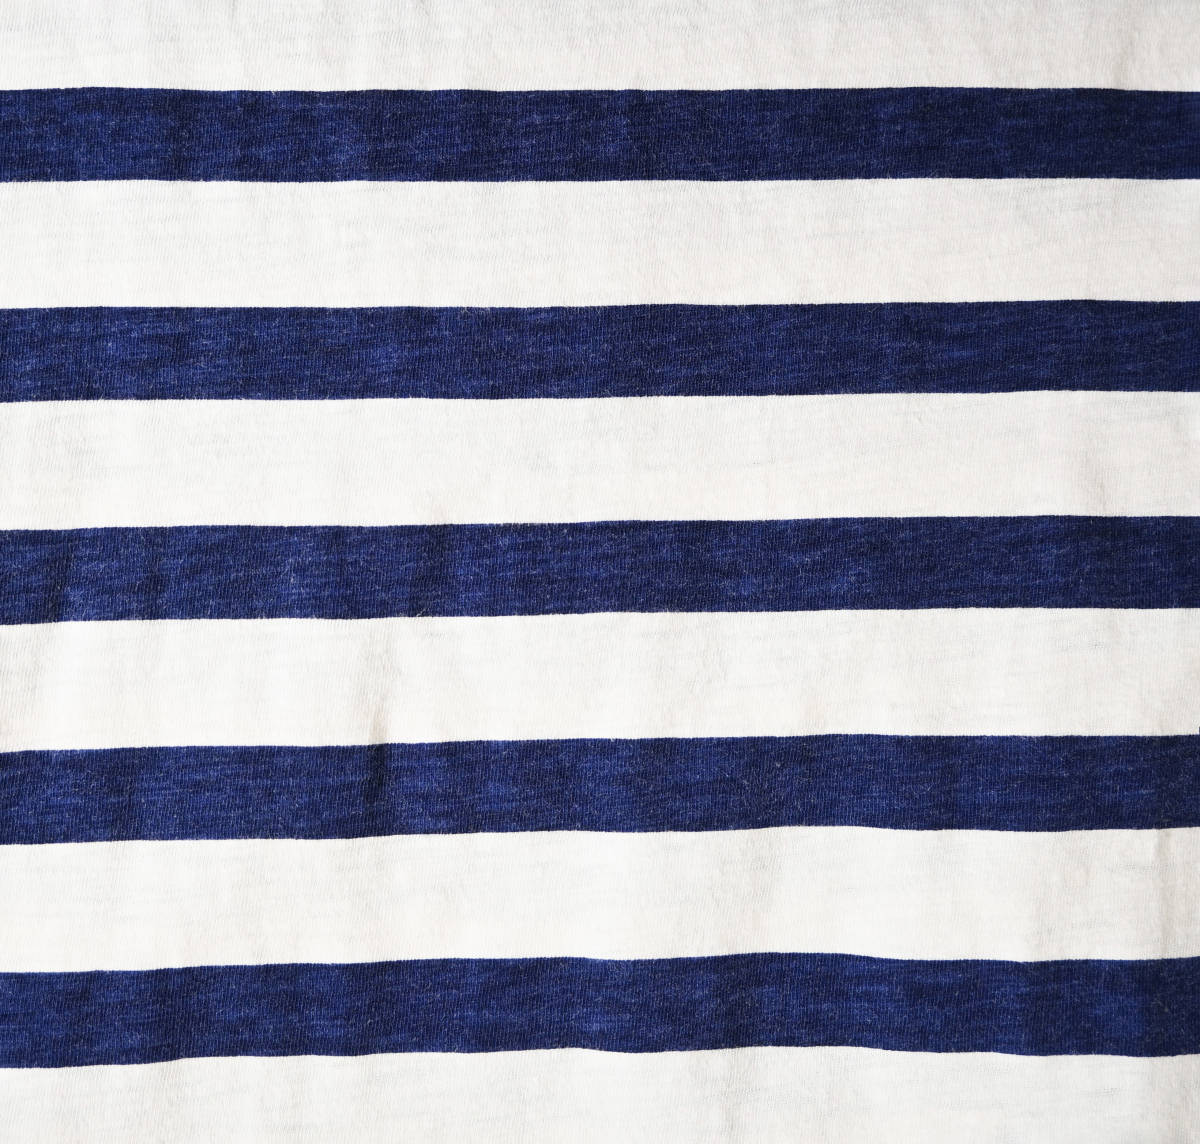  prompt decision [MHL] marine futoshi border long sleeve T shirt /M size / white × navy ( indigo )/MARGARET HOWELL/ complete sale model / Anne glow bar / rare 